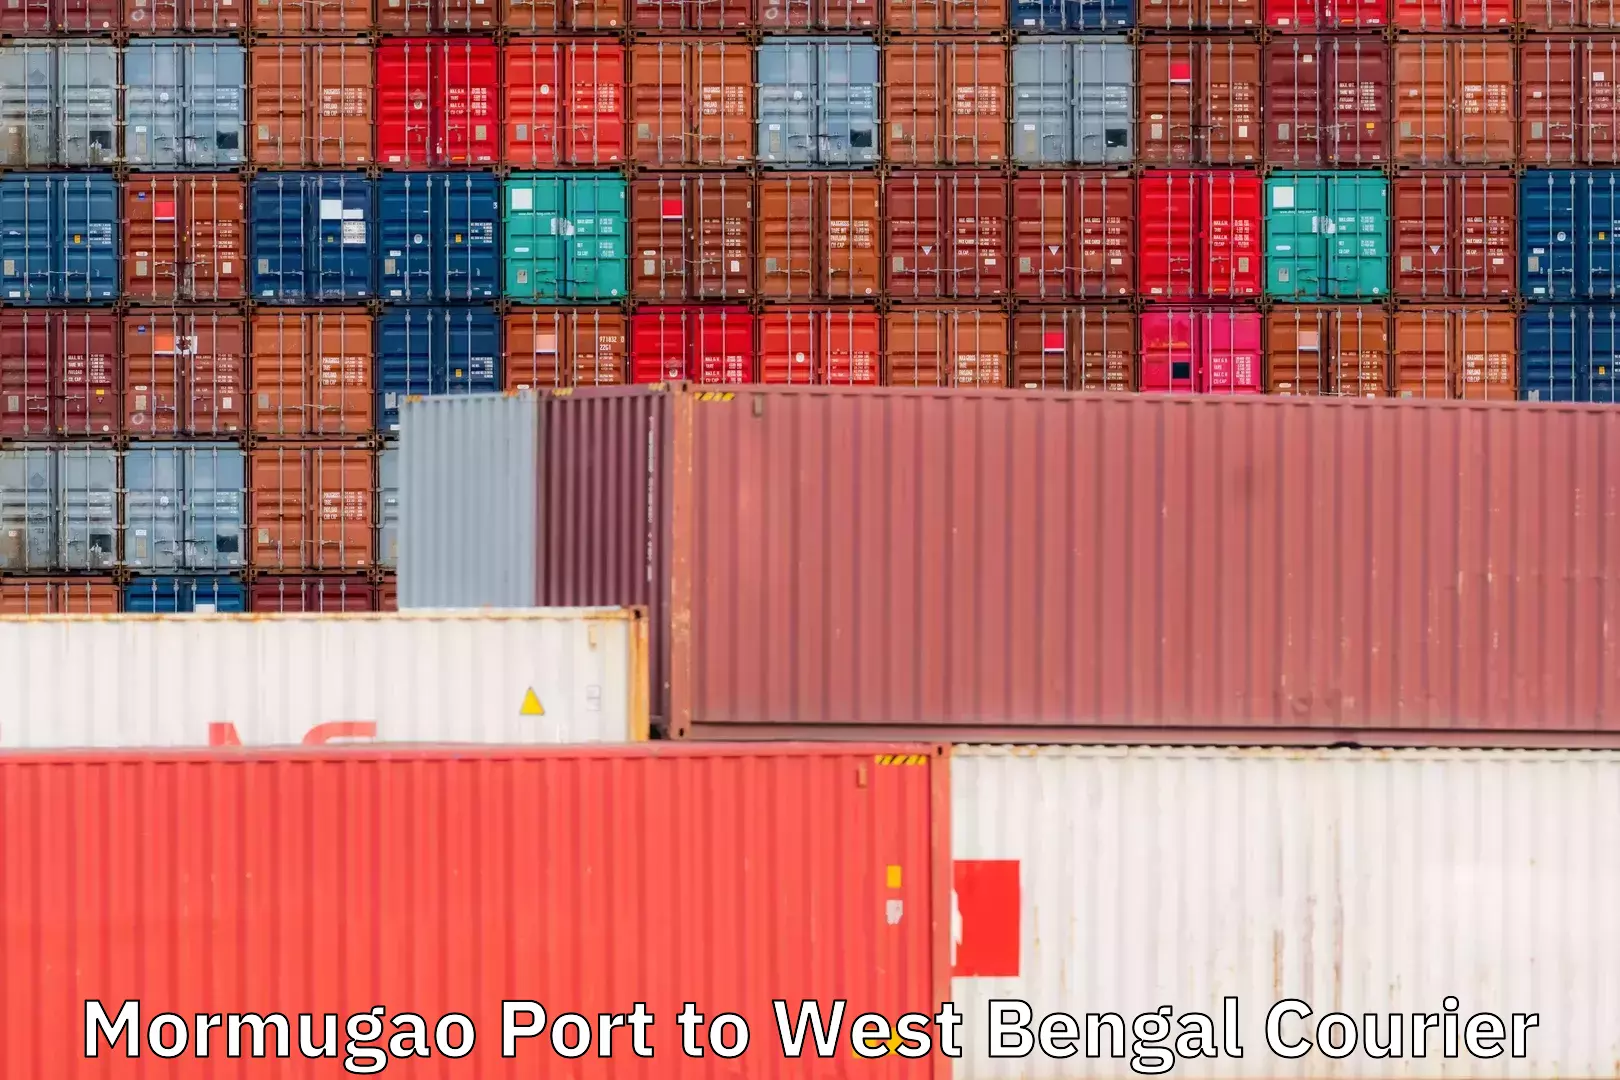 Courier service comparison Mormugao Port to Mohammad Bazar